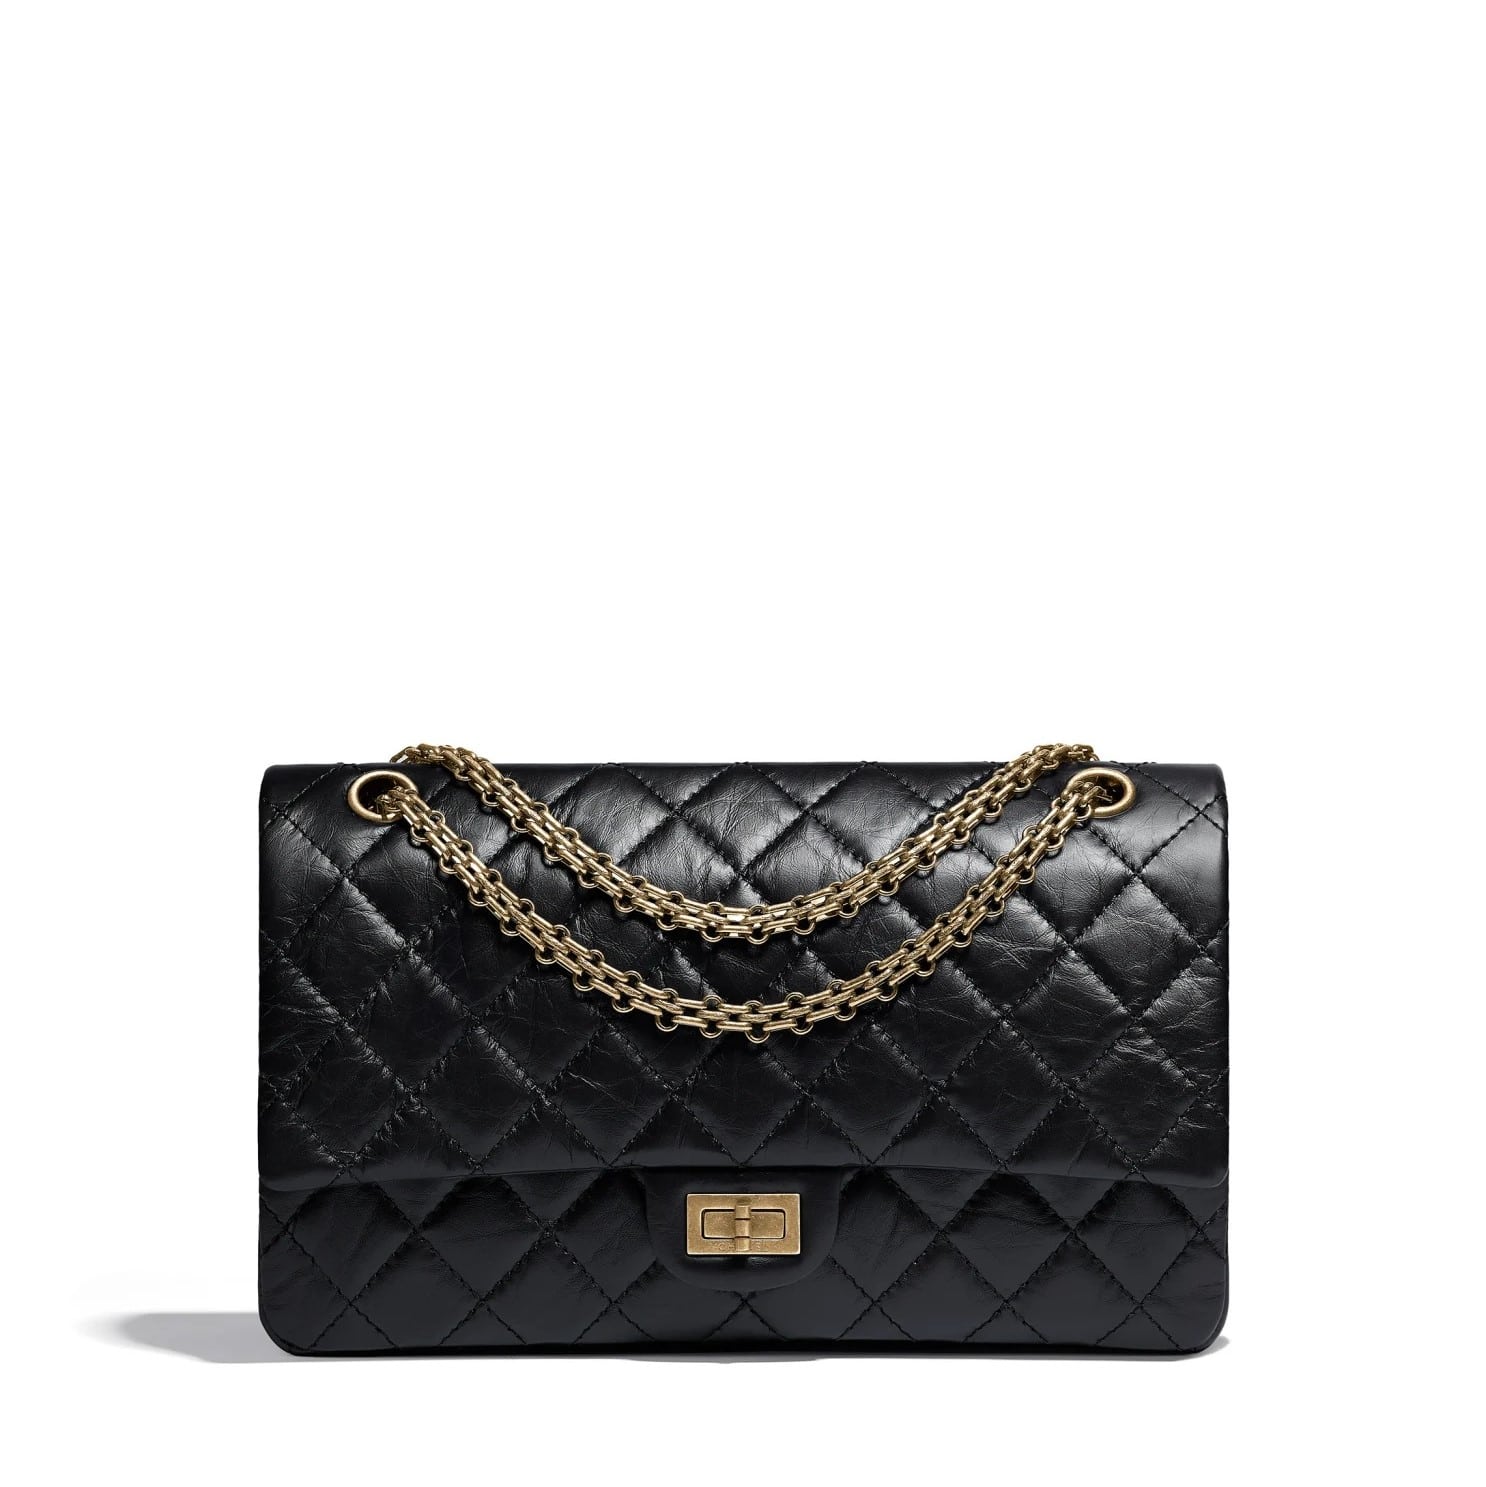 Chanel Black Large 2.55 Handbag